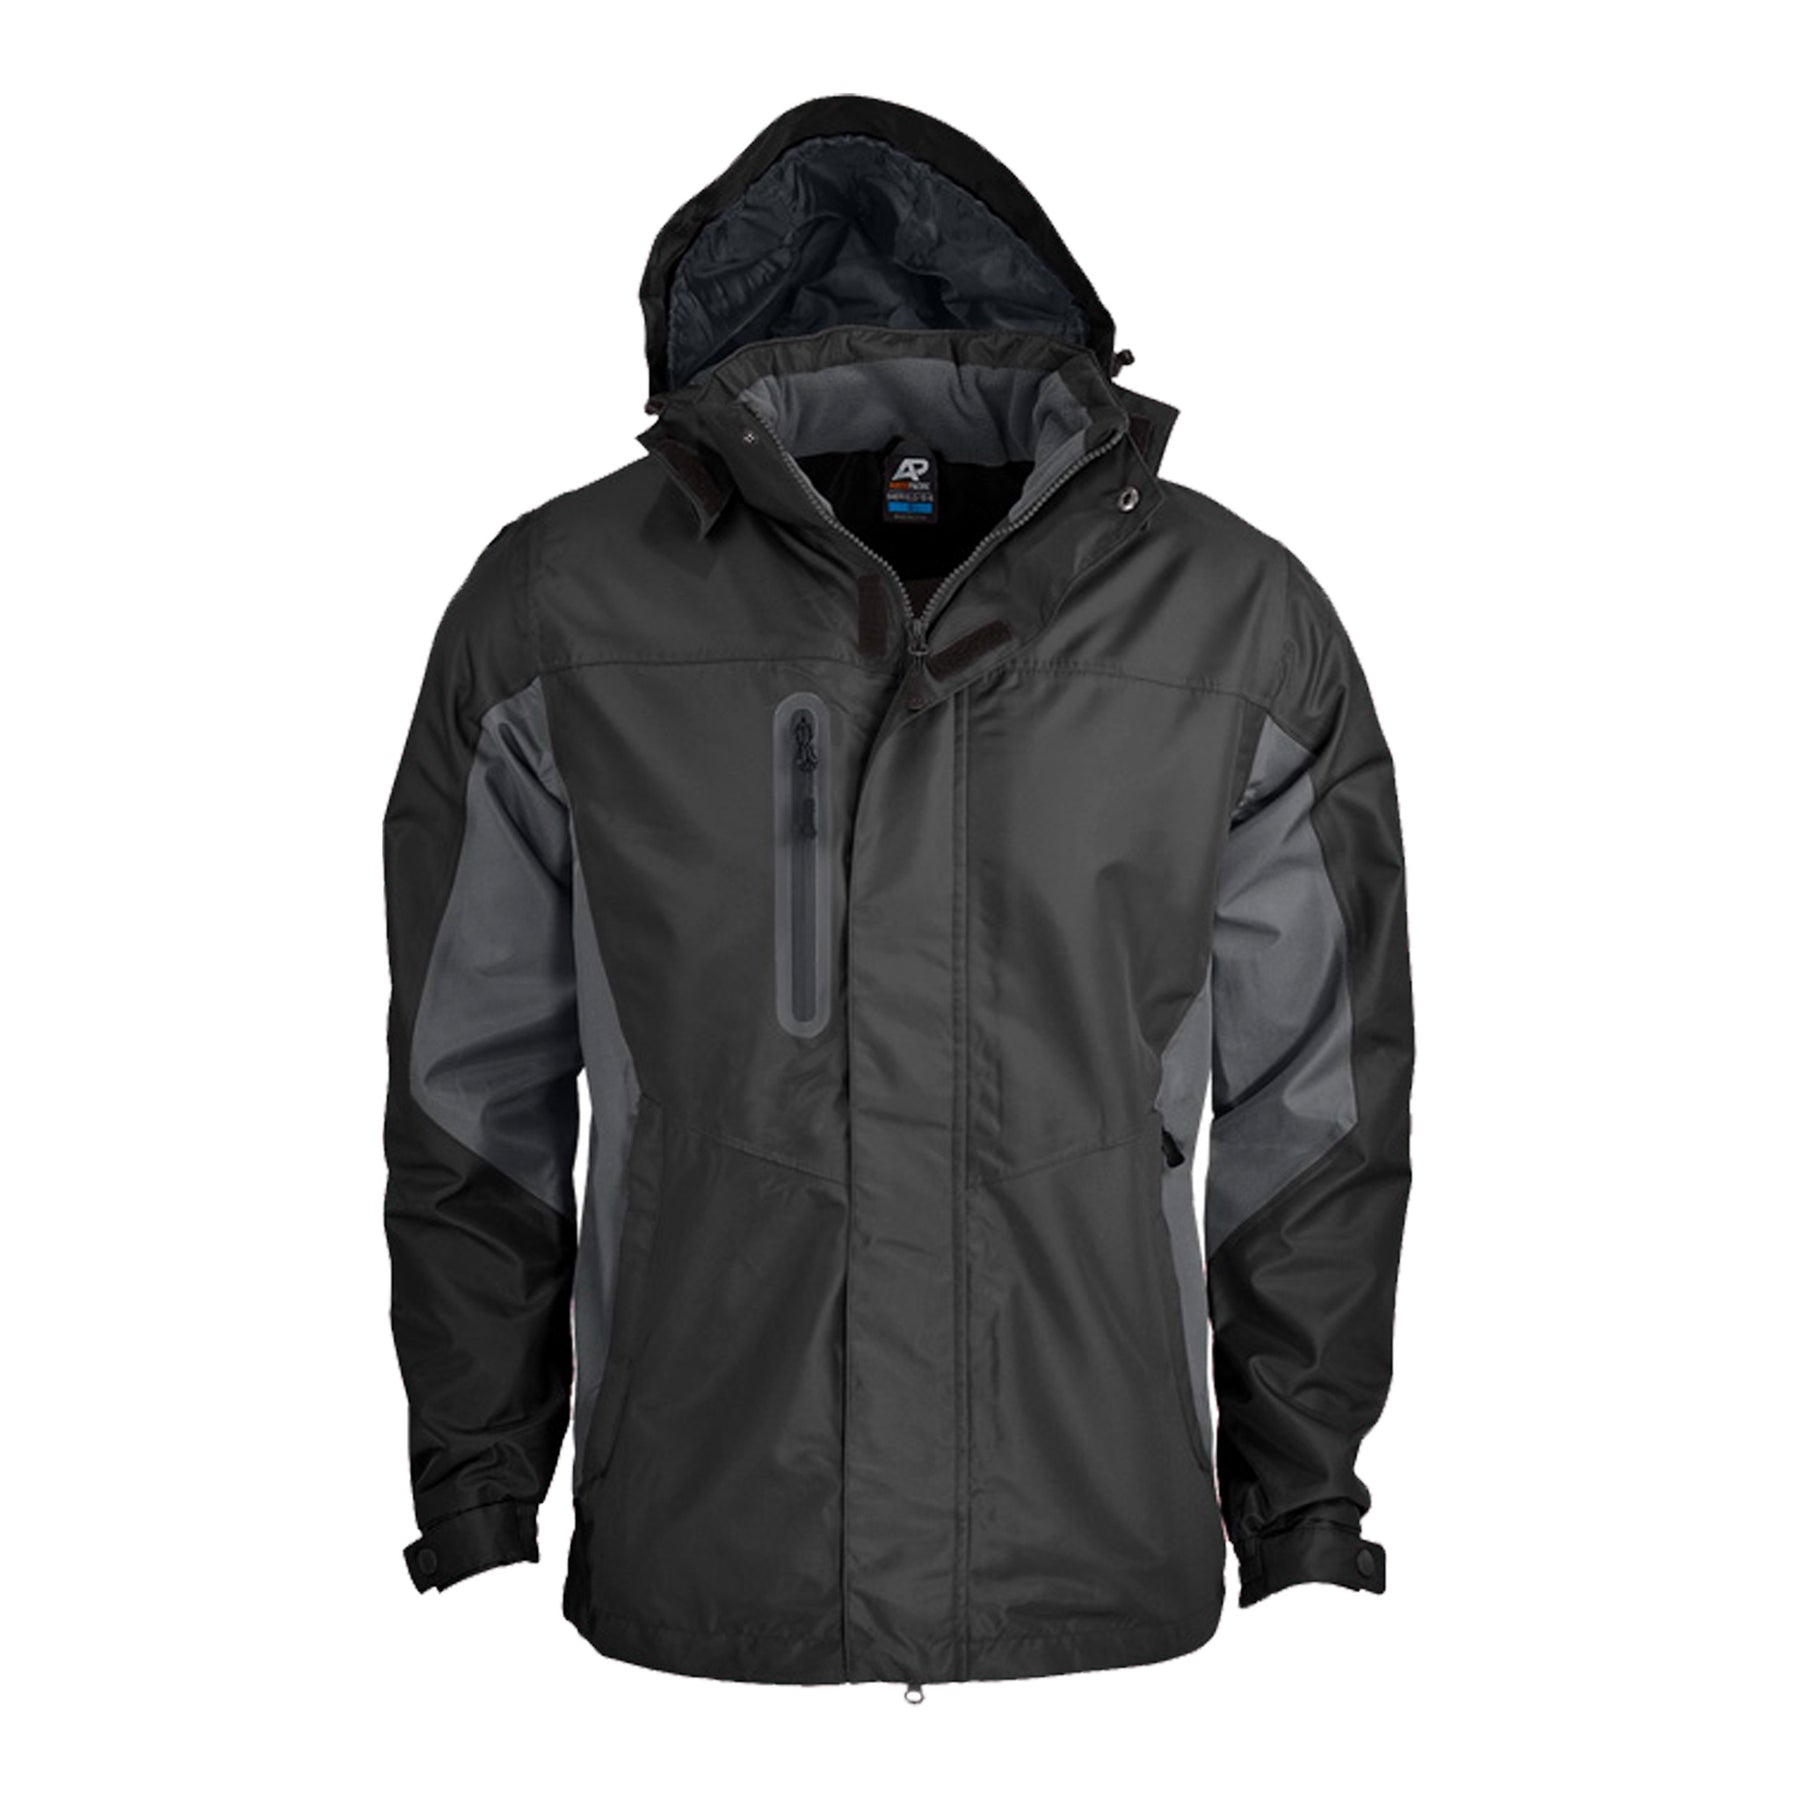 sheffield mens jacket in black grey